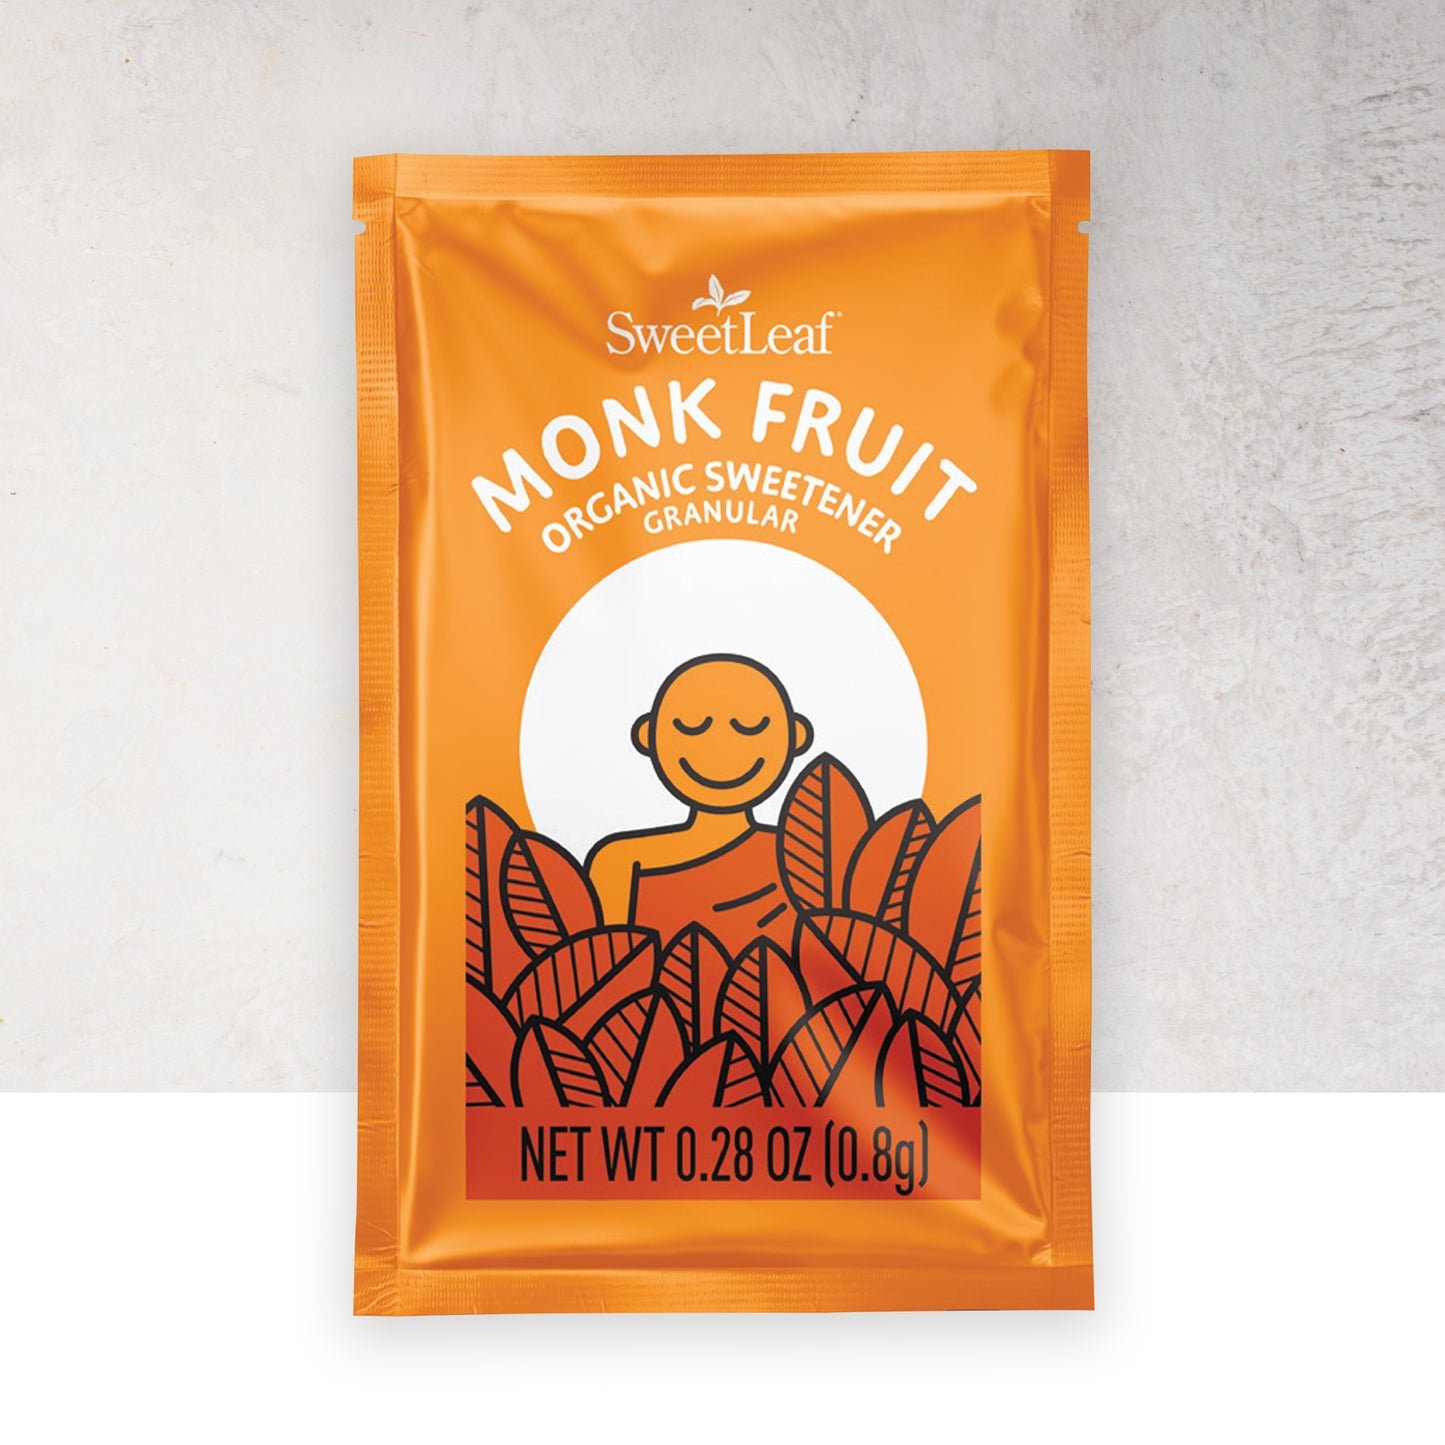 Granular Monk Fruit Sweetener, 80 packets